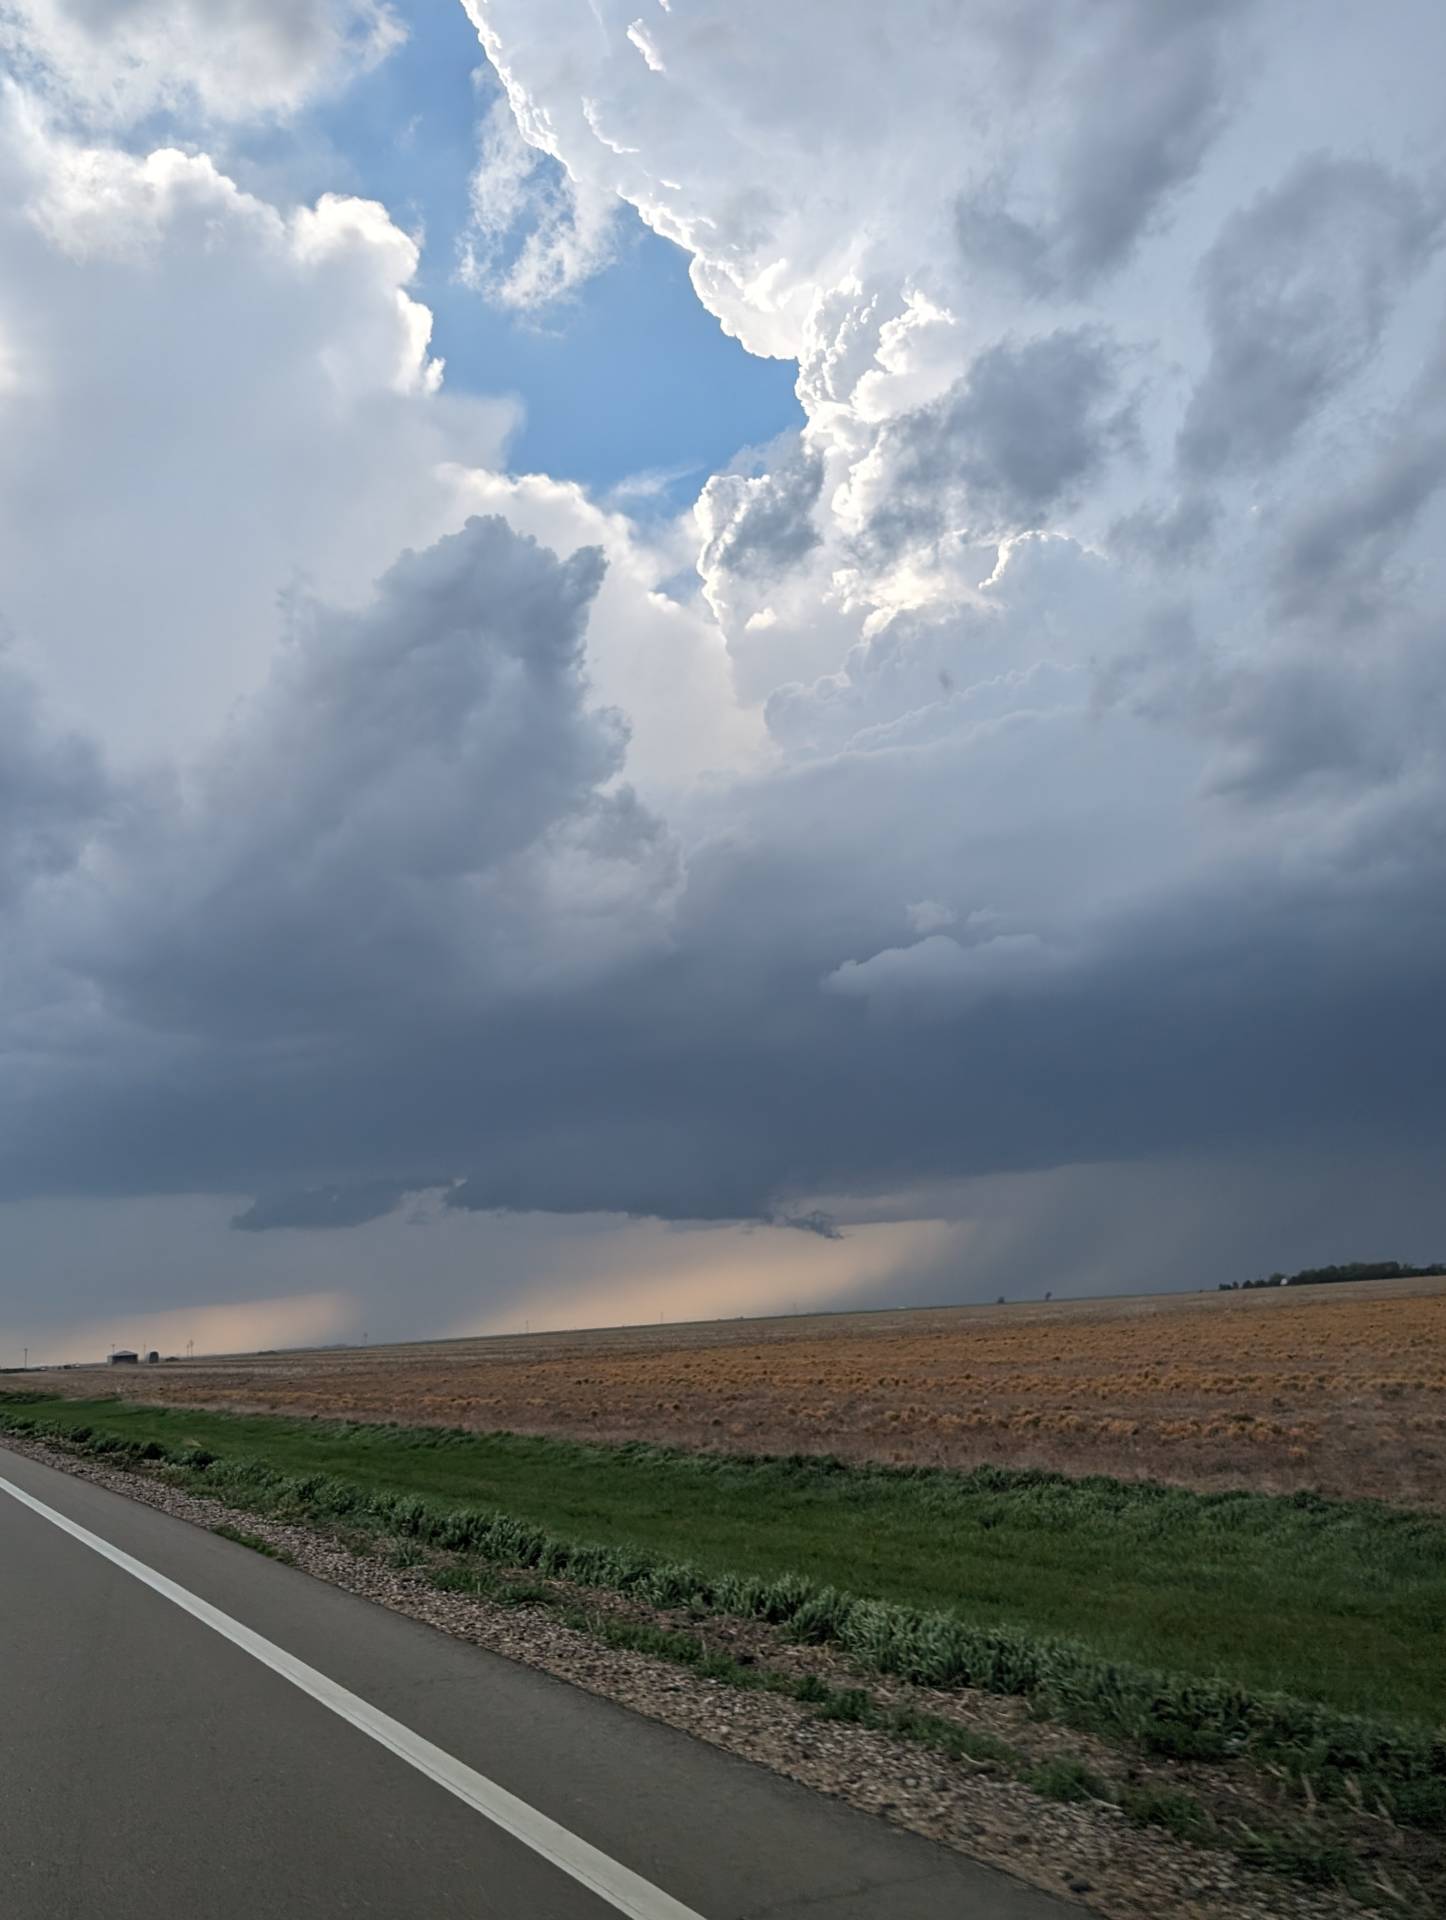 Severe storm north of Healy, Kansas. #kswx @NWSGoodland